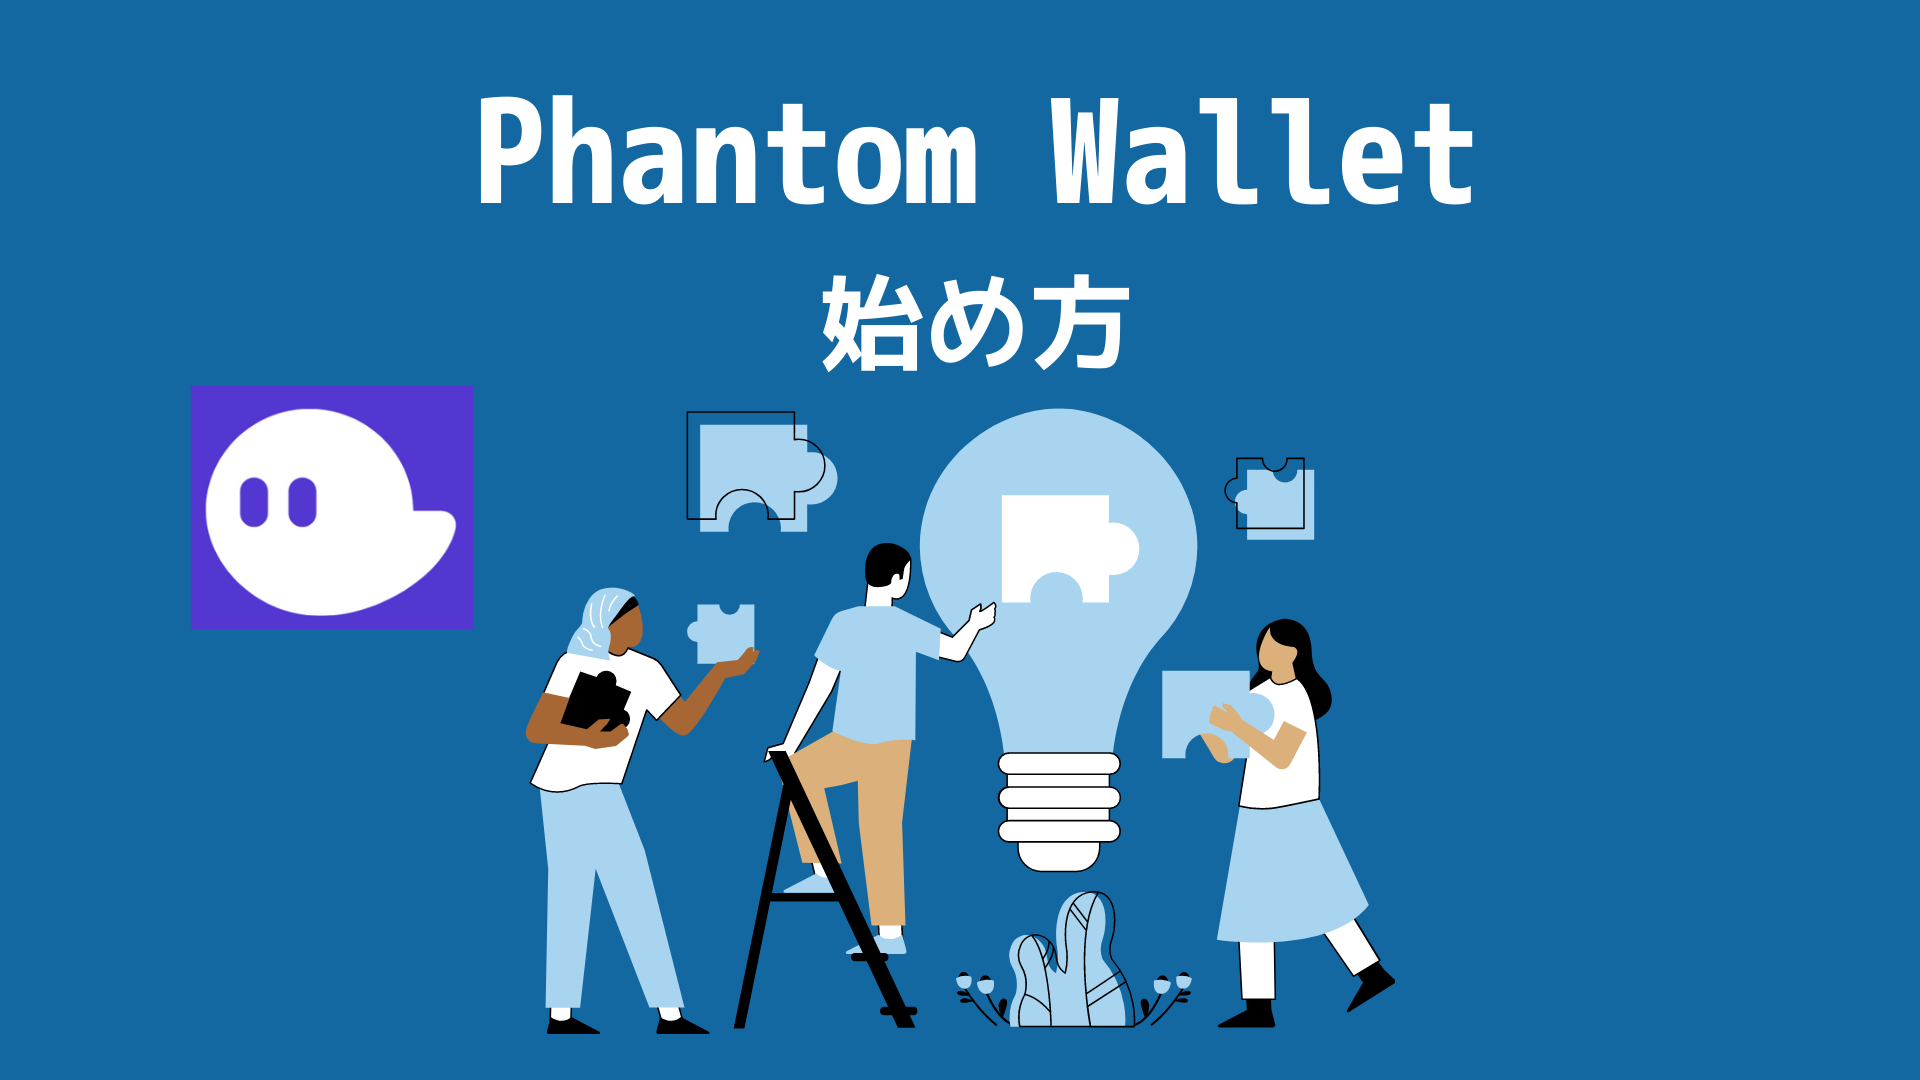 Phantom wallet始め方